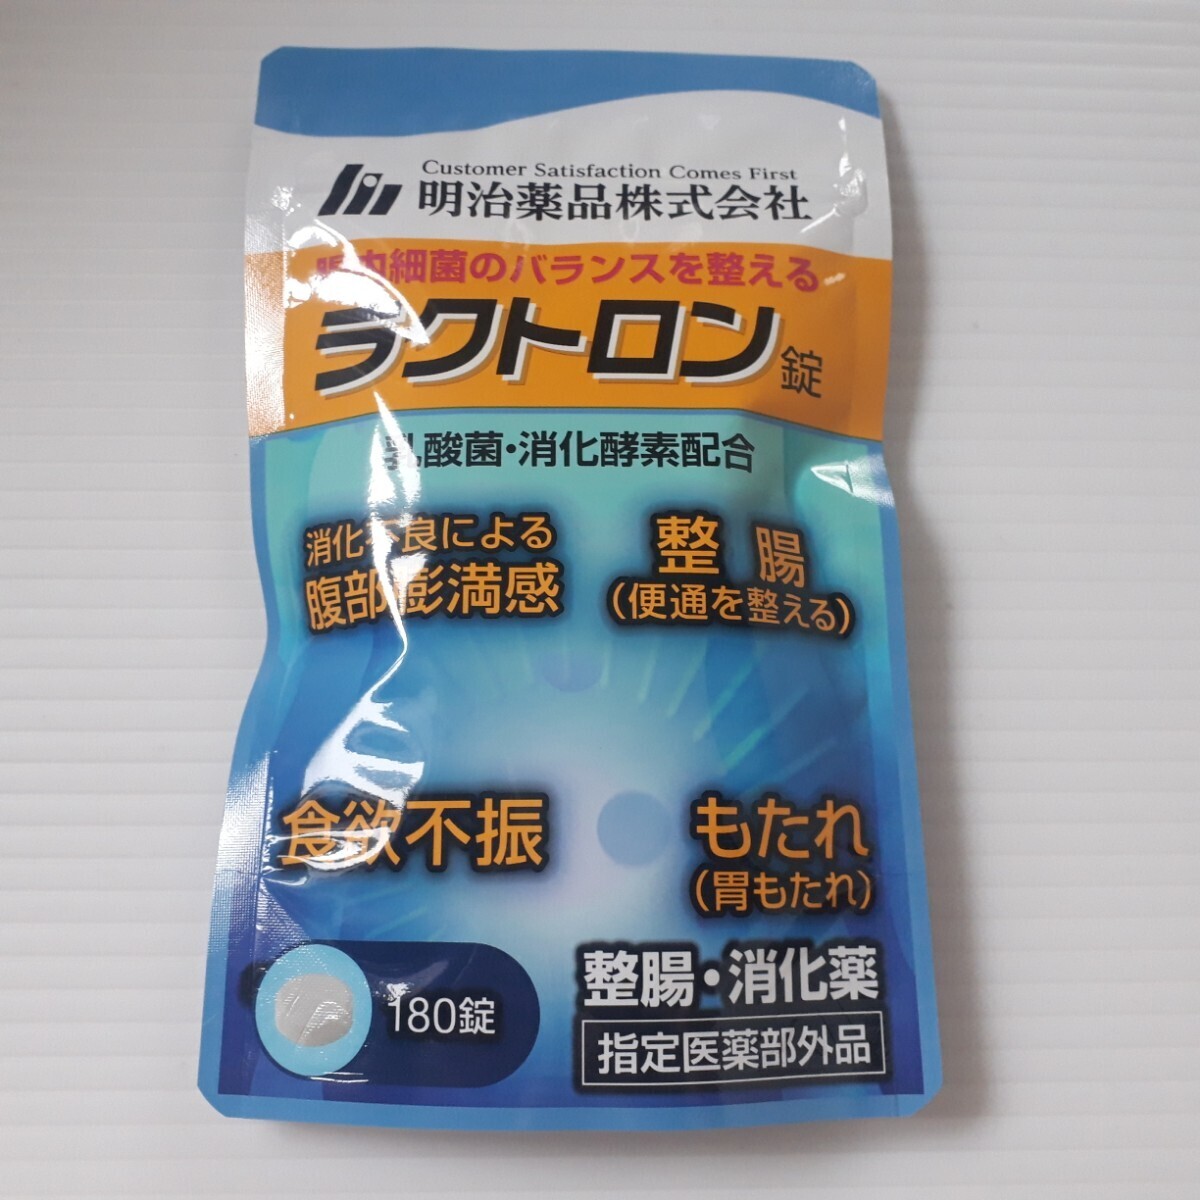 lakto long pills 180 pills ×1 sack Meiji medicines new goods unopened ②